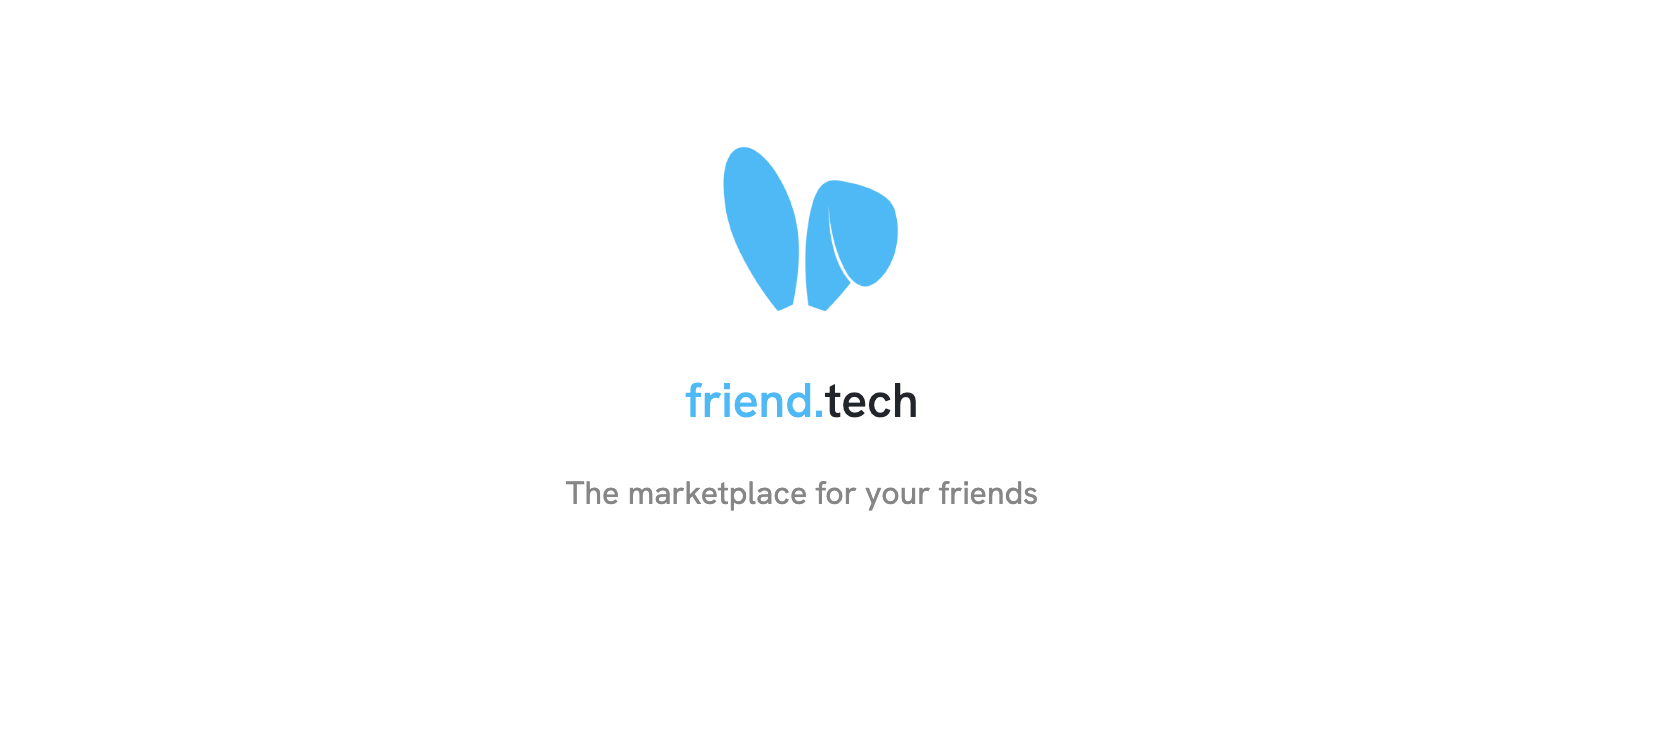 Friendtech: The New Social Media Platform